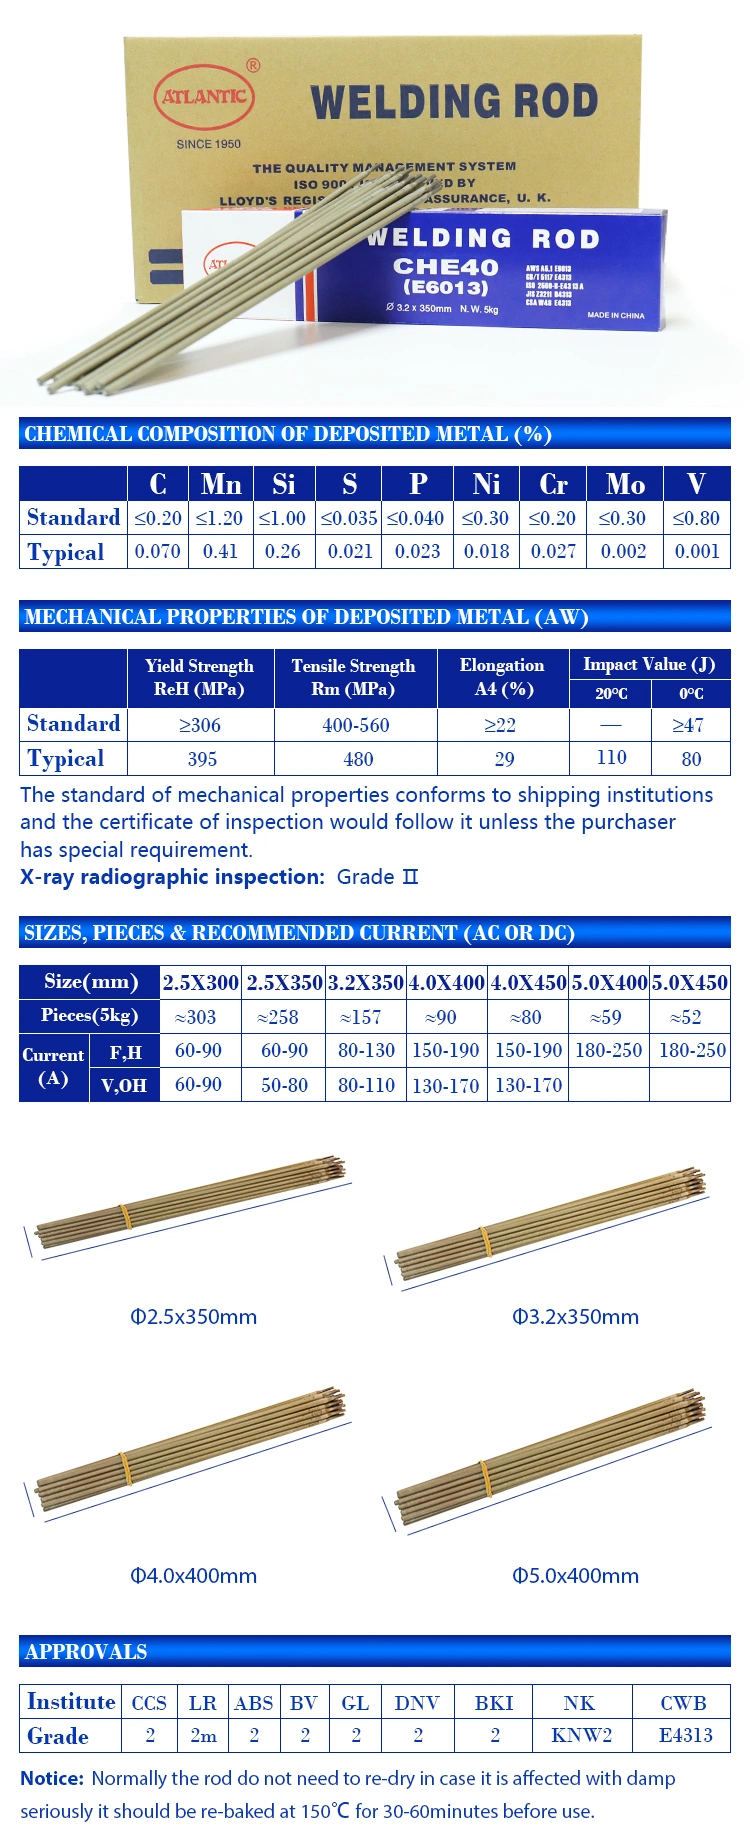 Atlantic Welding &amp; Soldering Supplies Welding Rod Aws Smaw Shipping 2mm - 5.8mm J421 Welding Electrode E6013